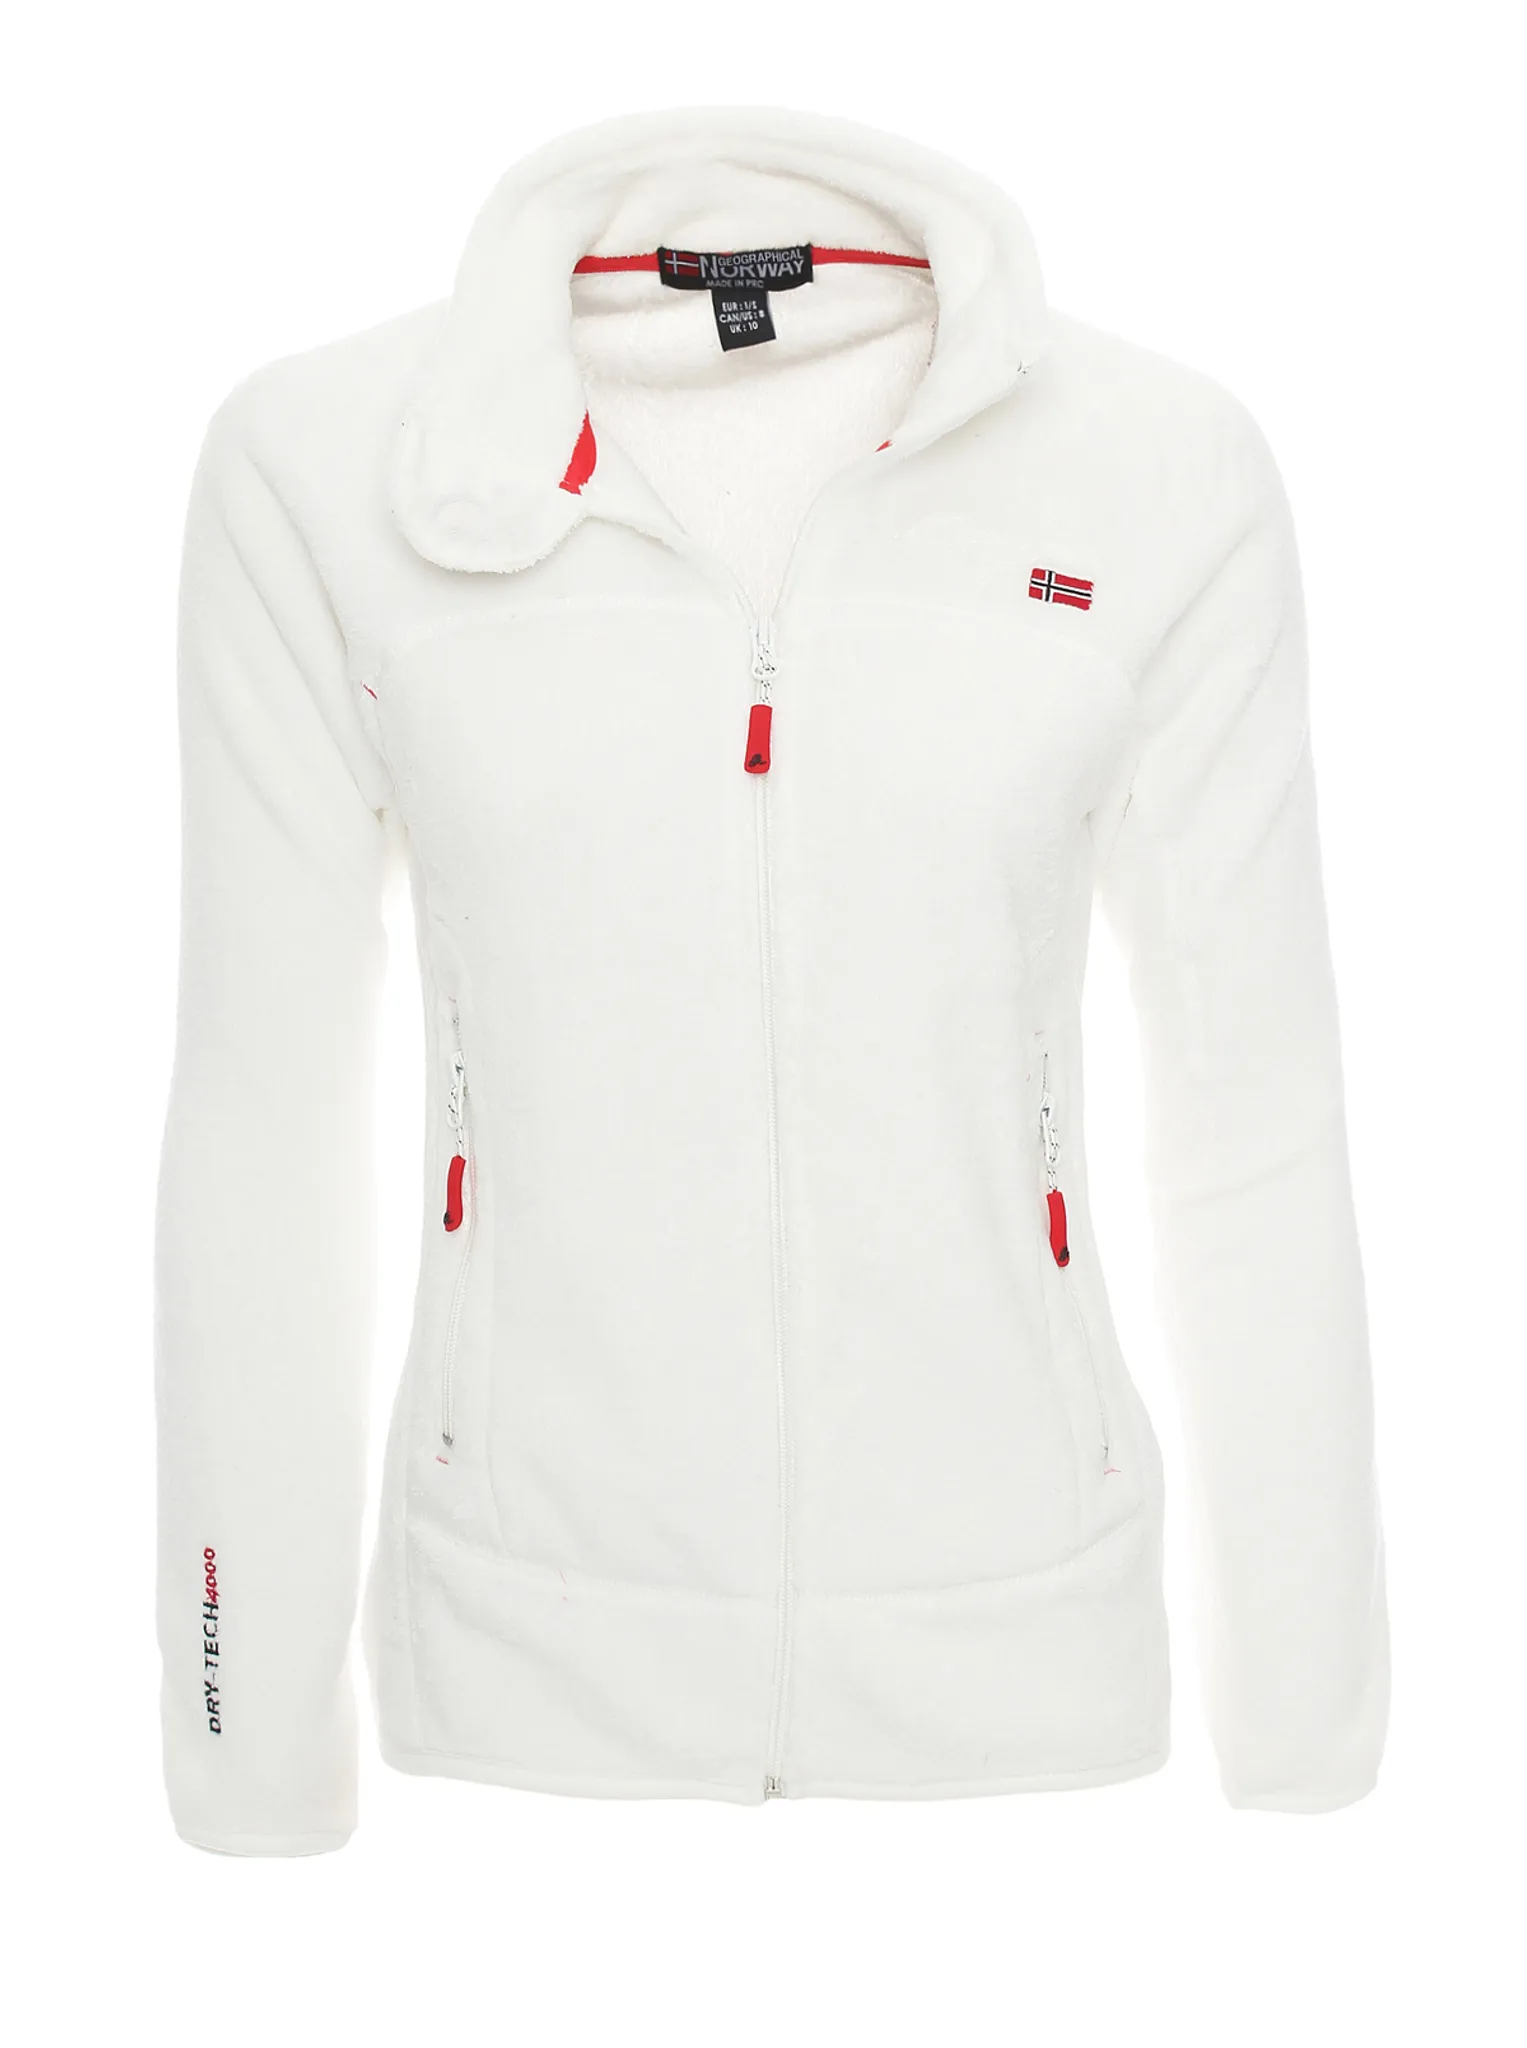 Geographical Norway Damen Sweater Jacke Sport flauschige Freizeit Model Fleece Ski Outdoor warme